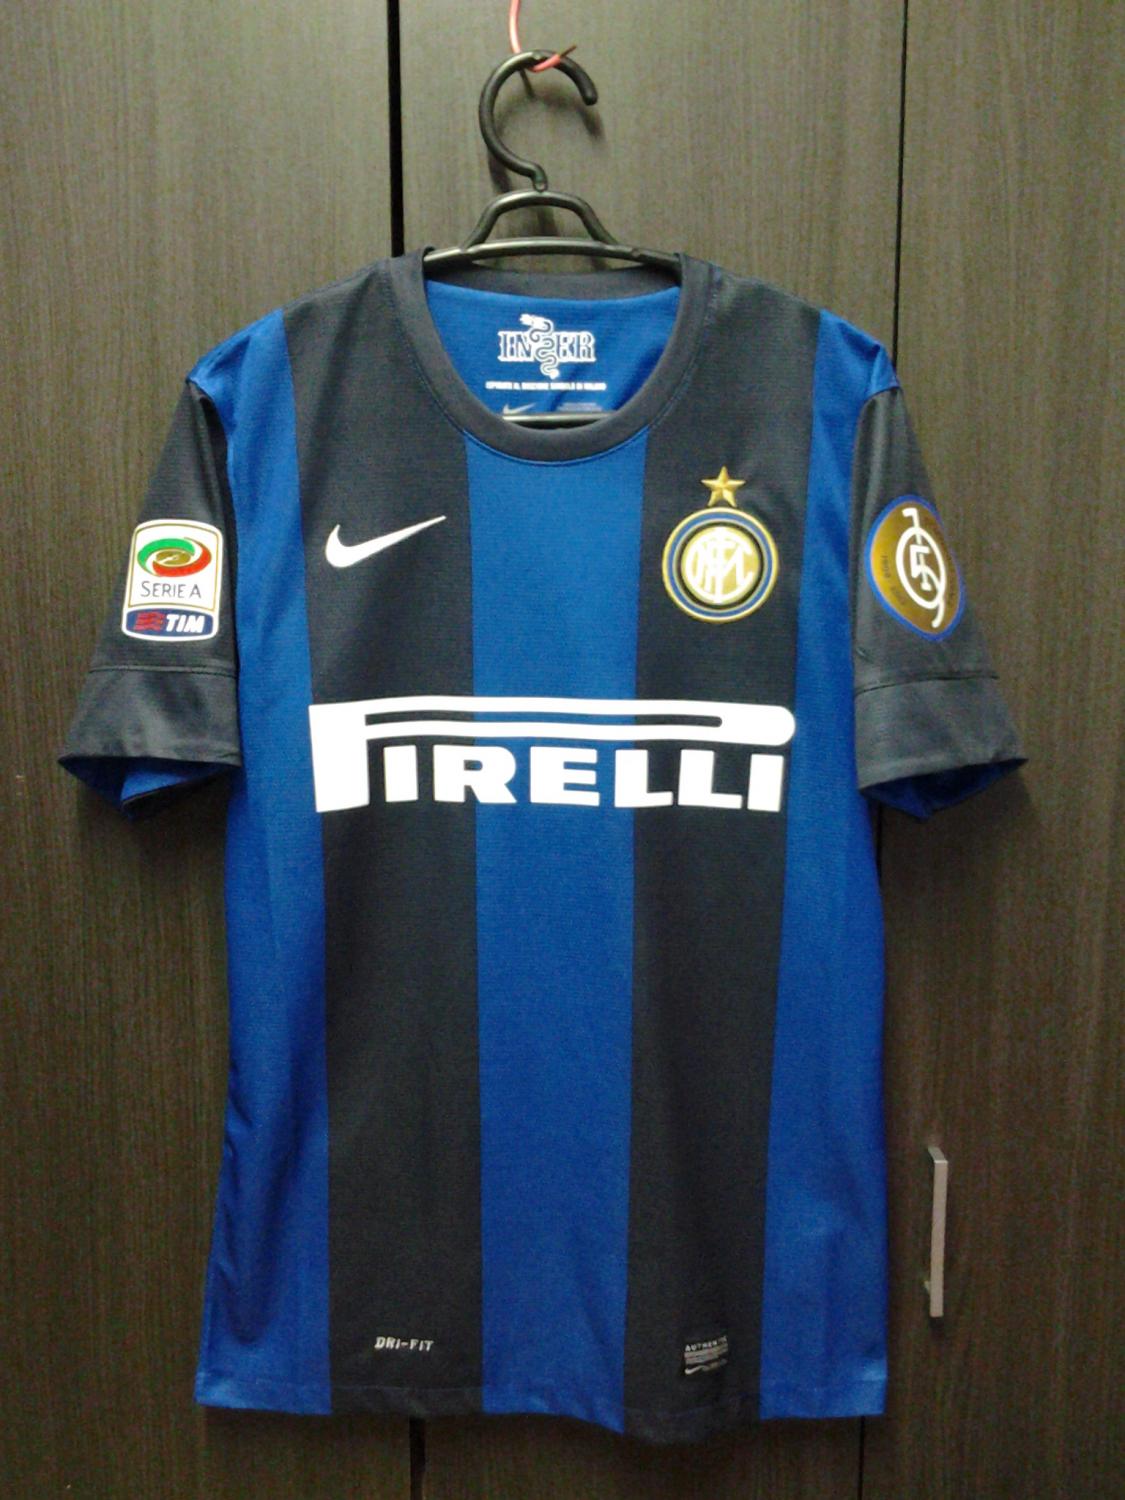 Internazionale Home football shirt 2012 - 2013.